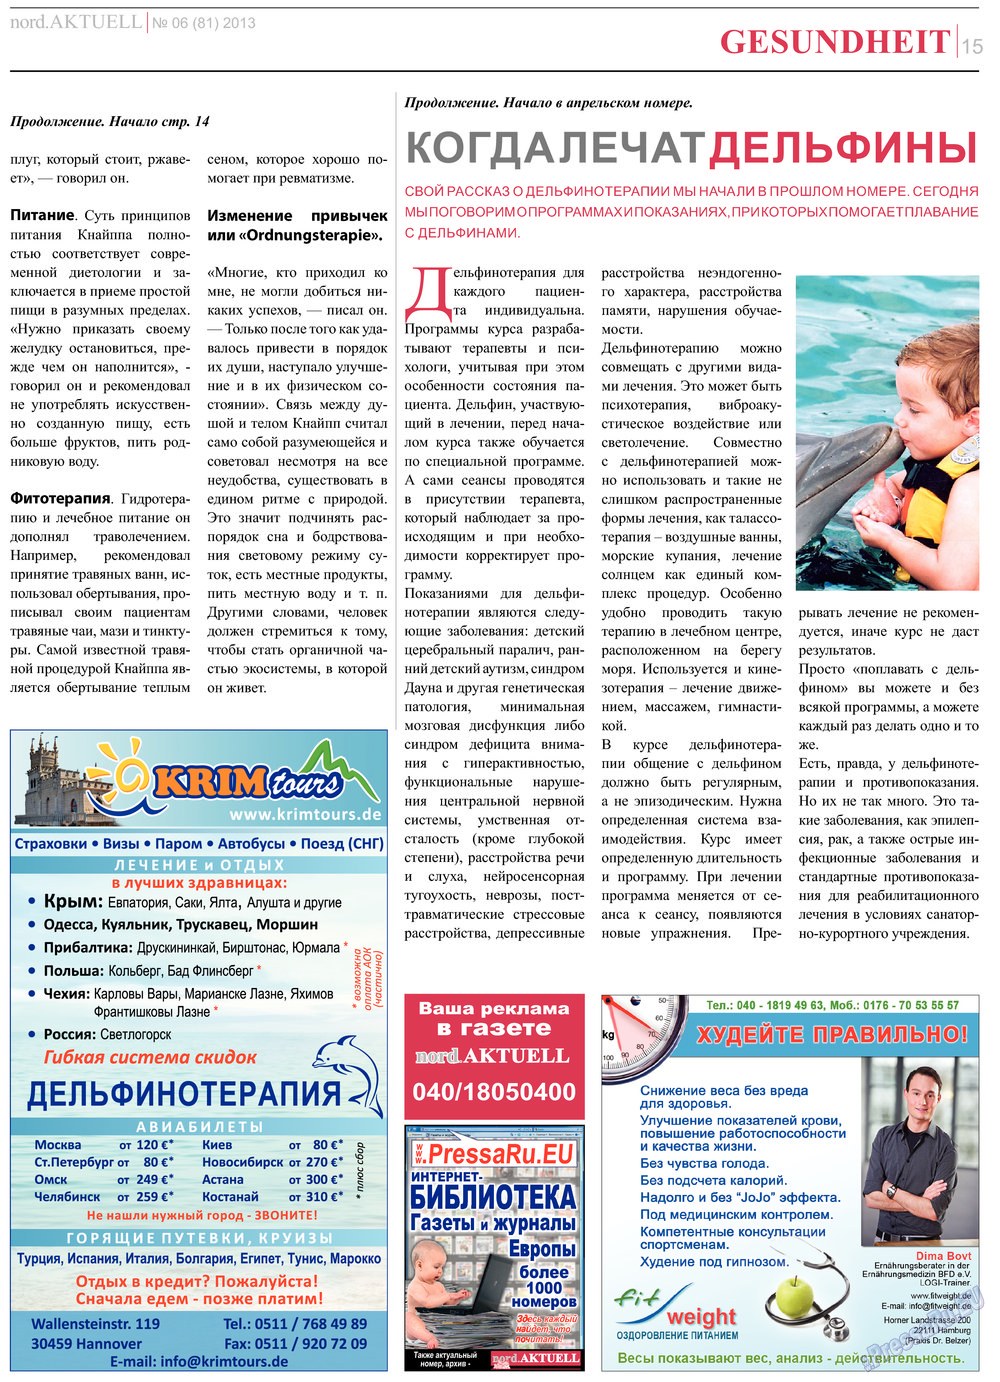 nord.Aktuell, газета. 2013 №6 стр.15